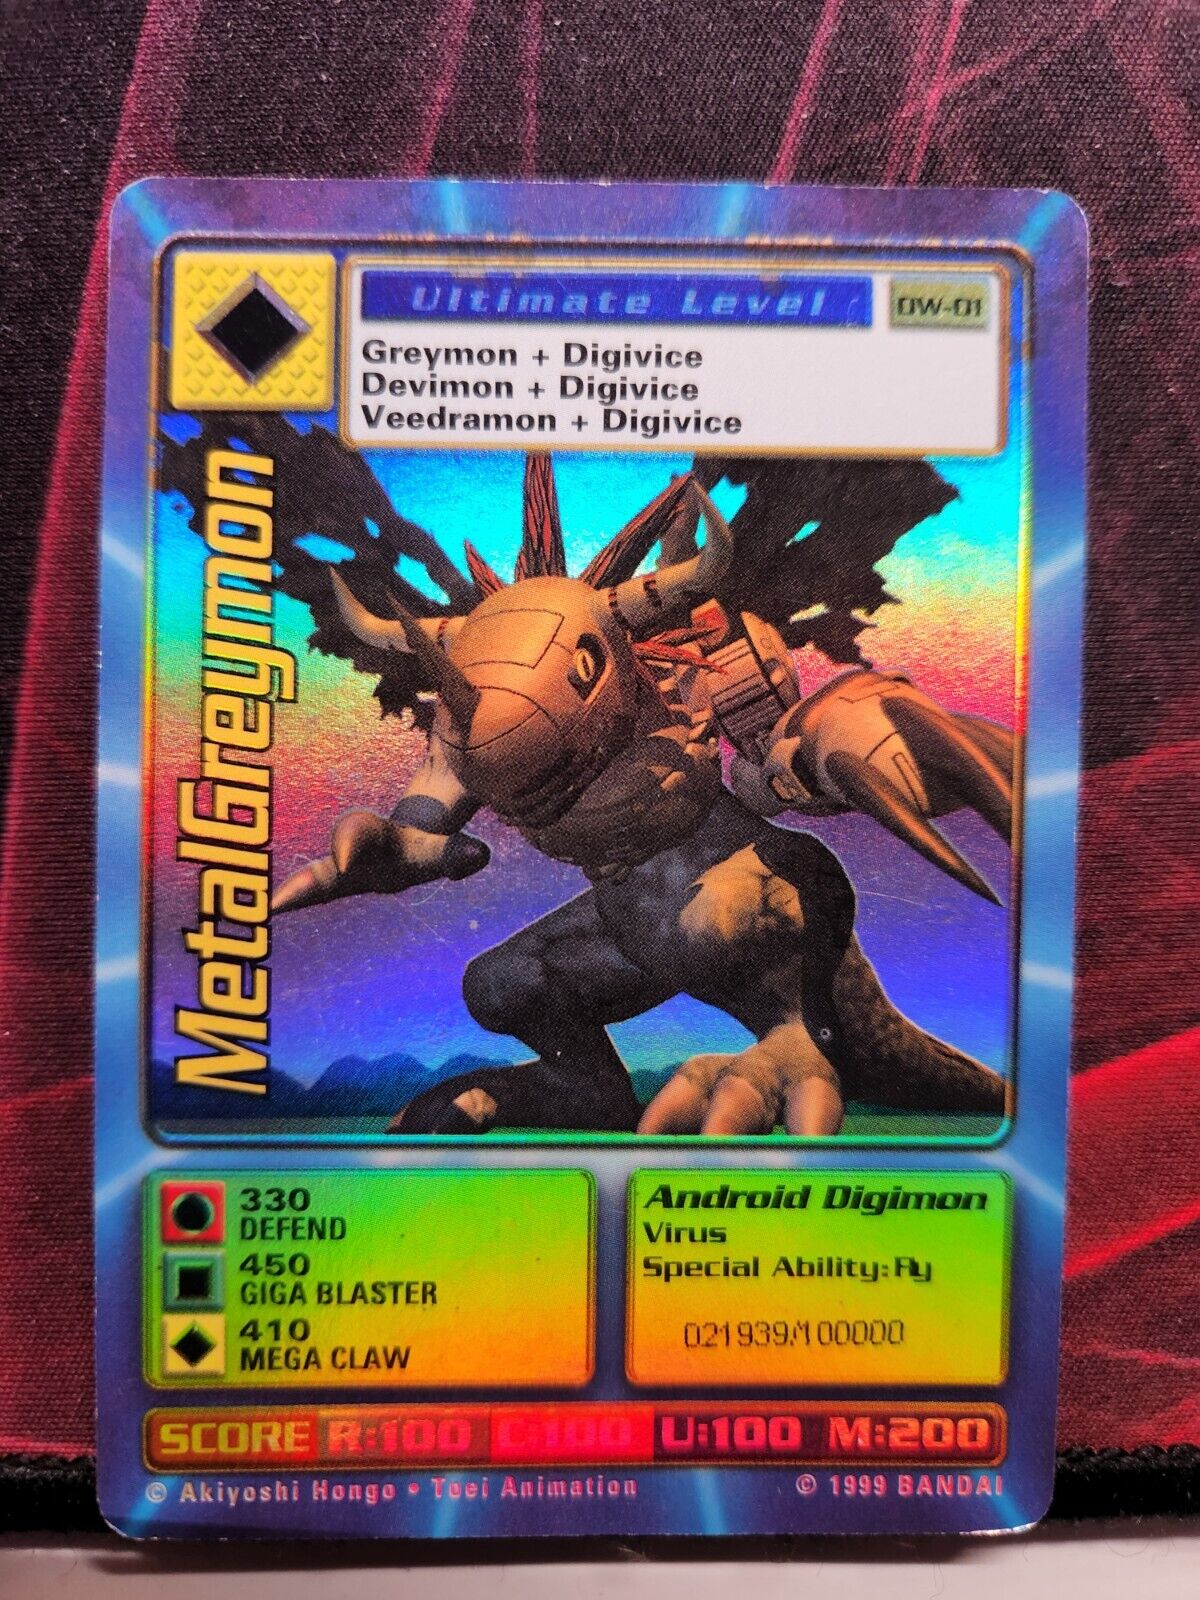 Digimon World PlayStation Promo DW-01 MetalGreymon - number 021939 / 100,000